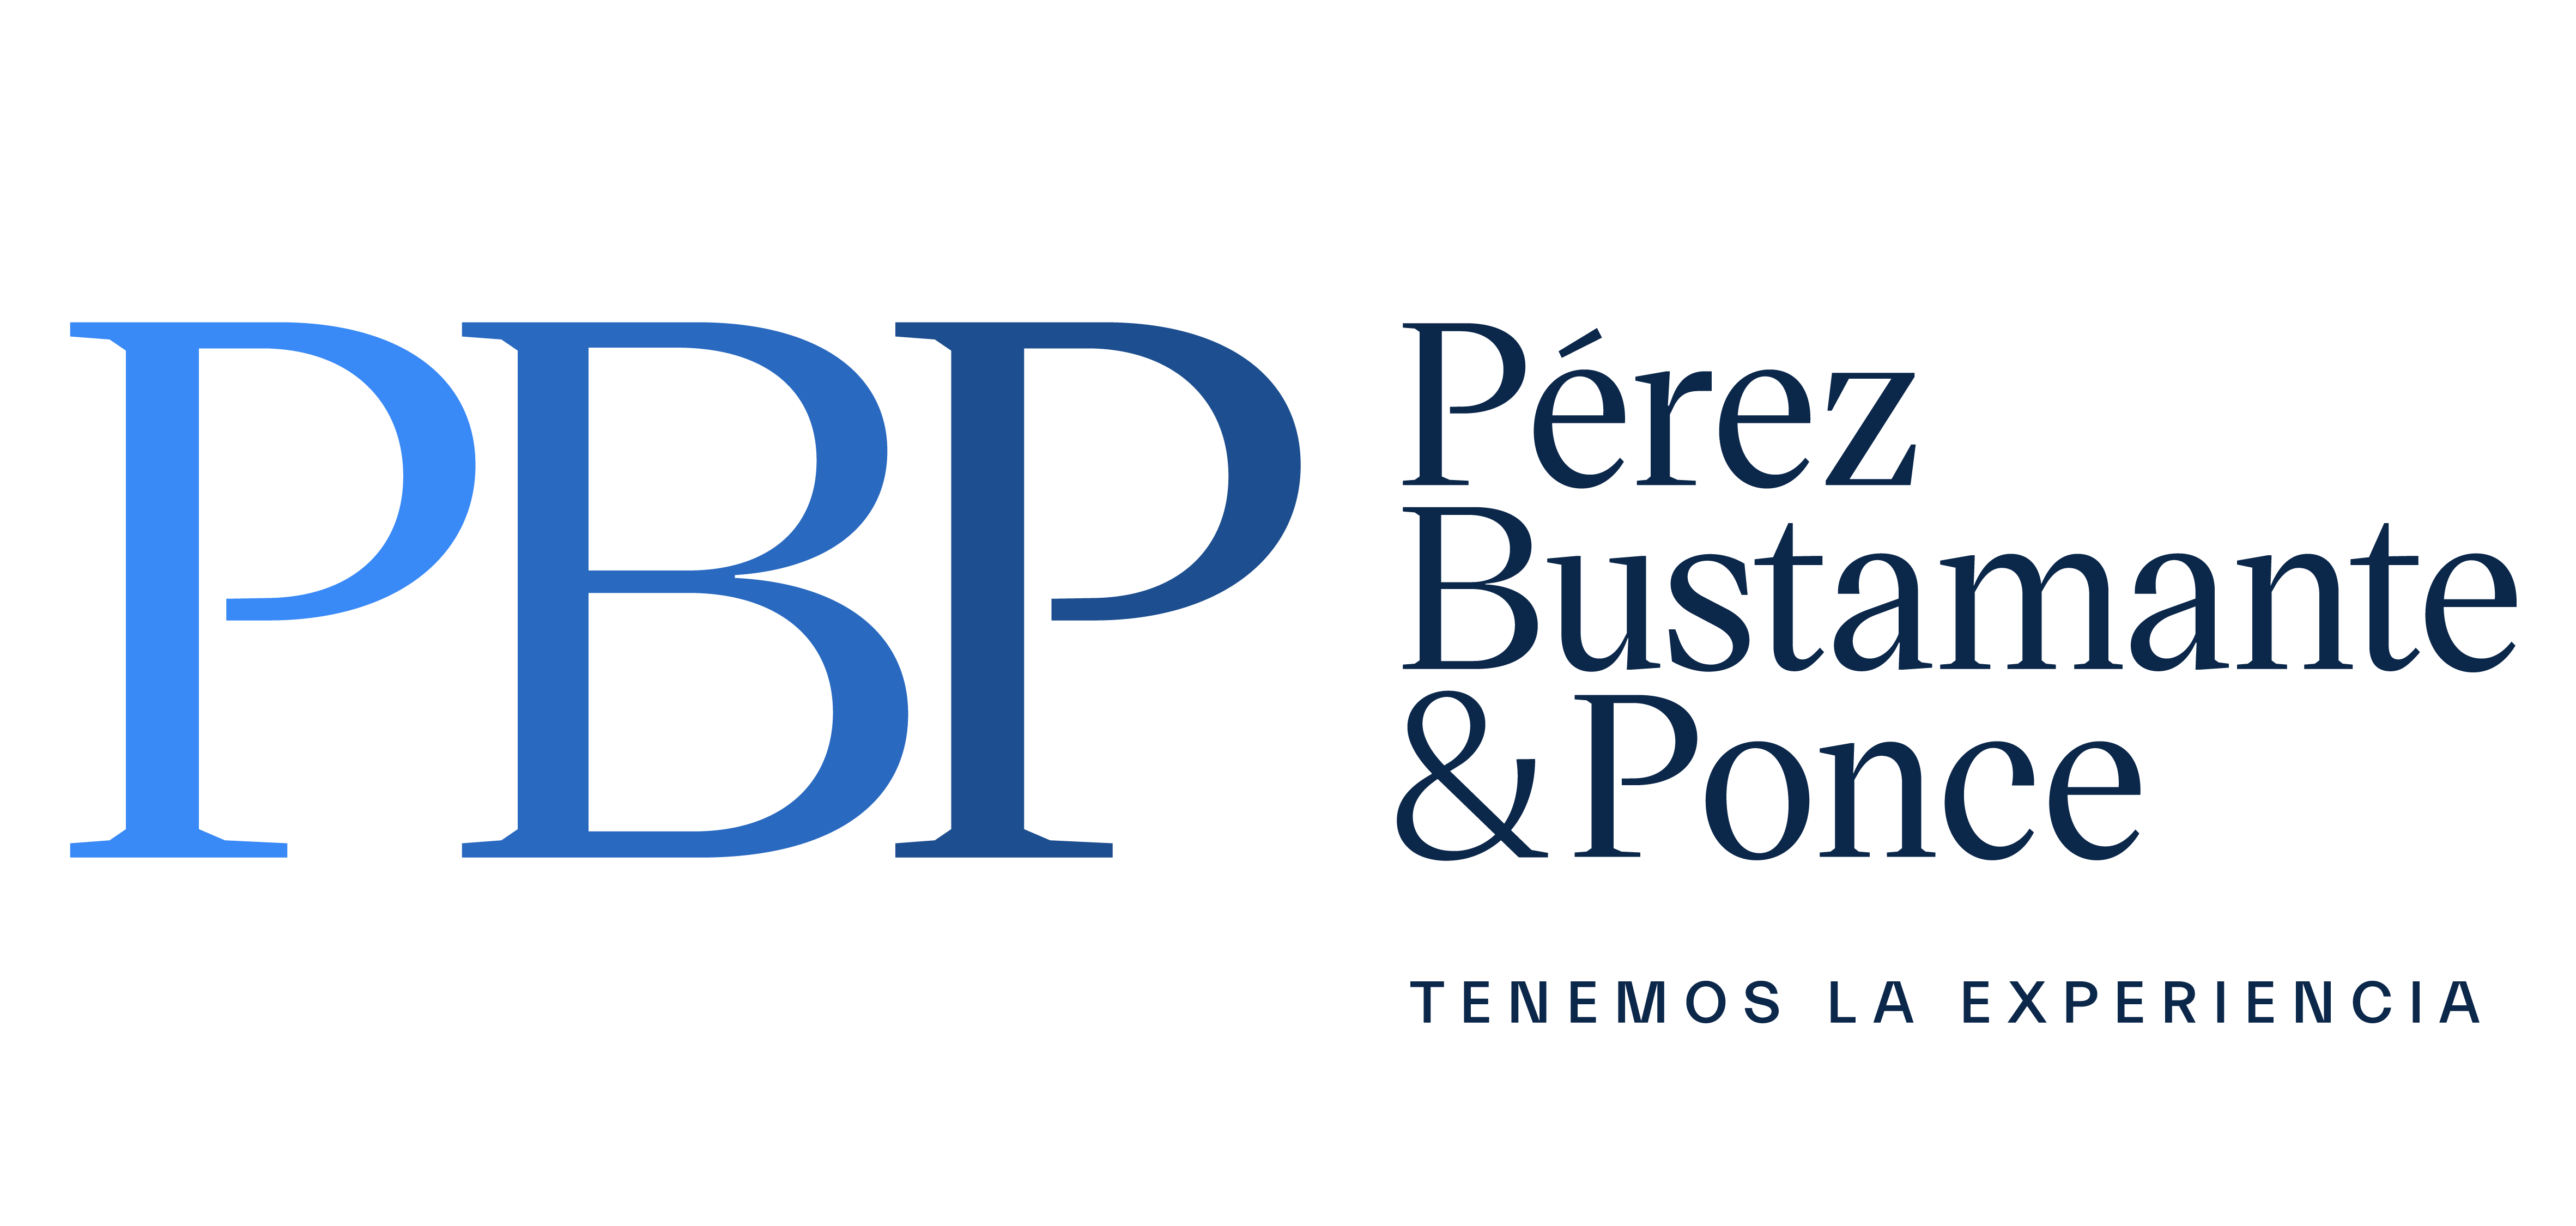 Pérez, Bustamante & Ponce Logo